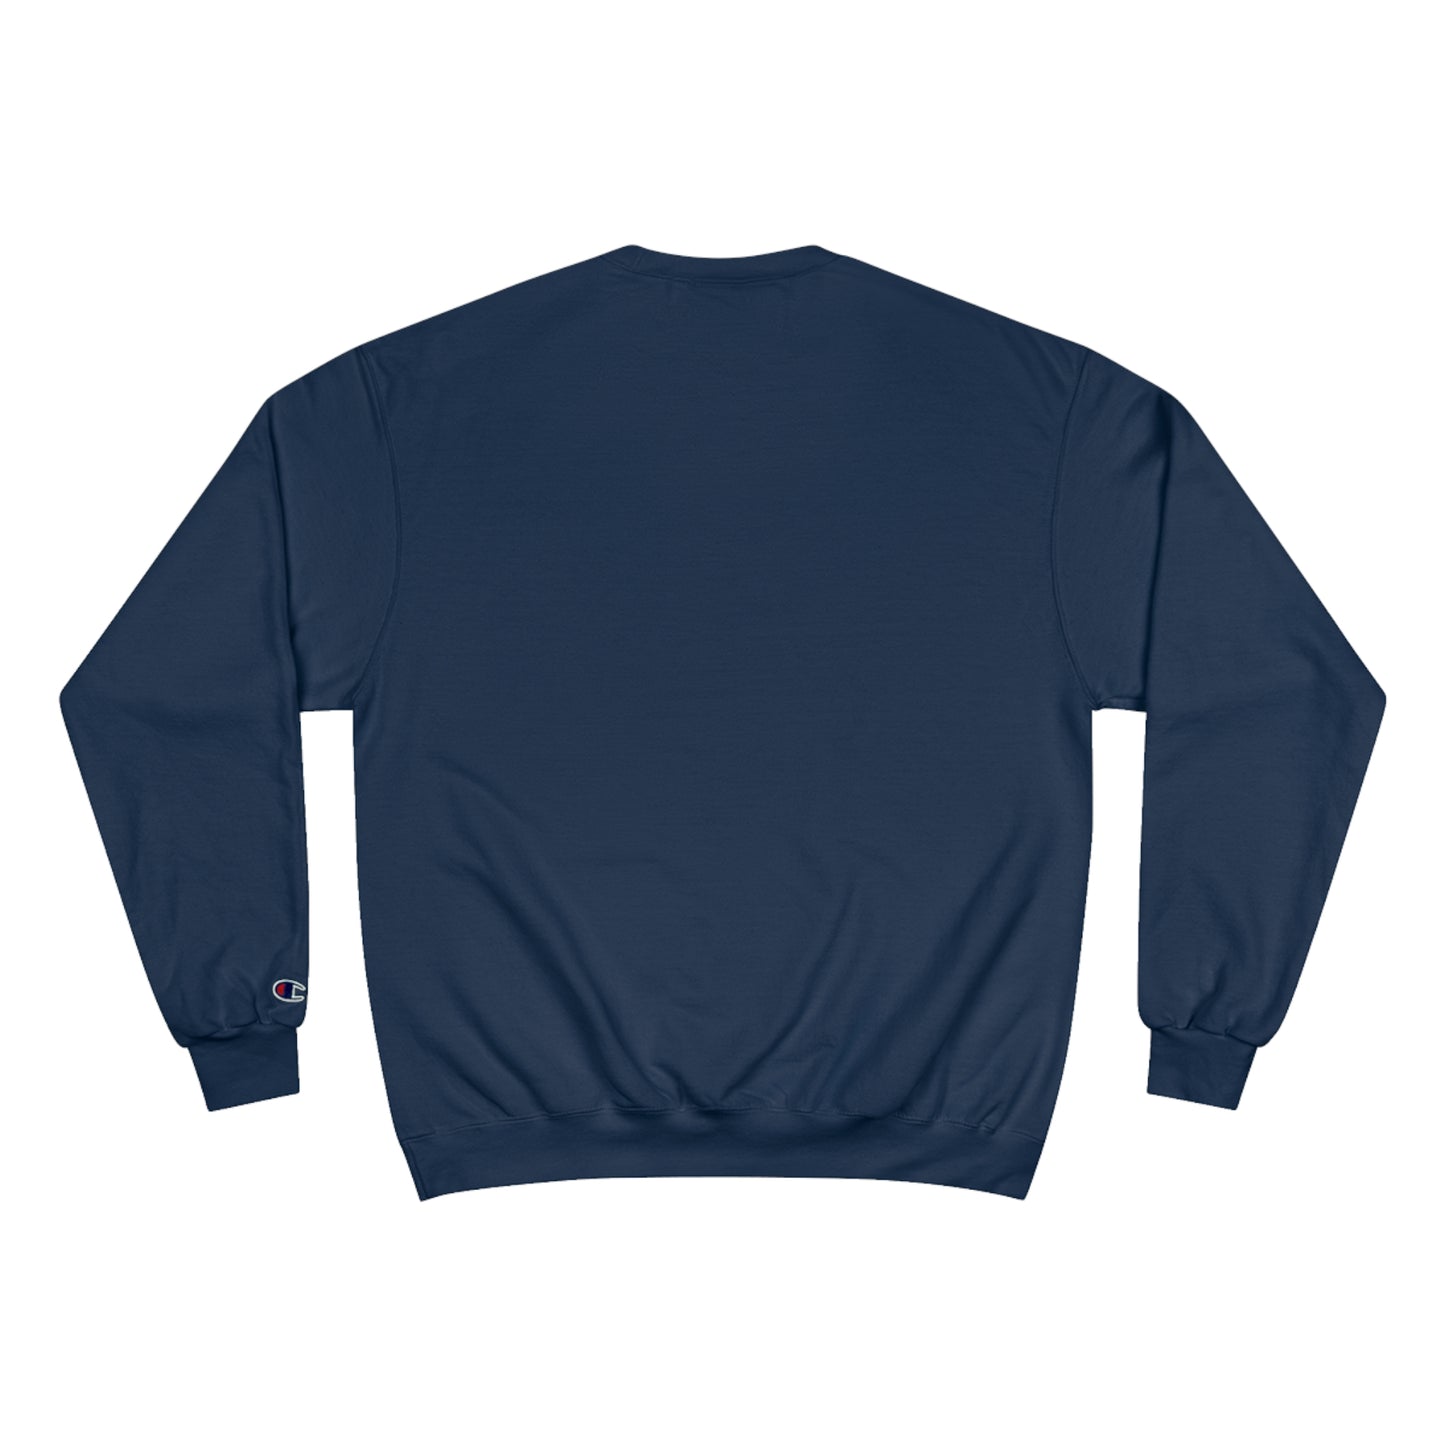 Blank - Champion Sweatshirt